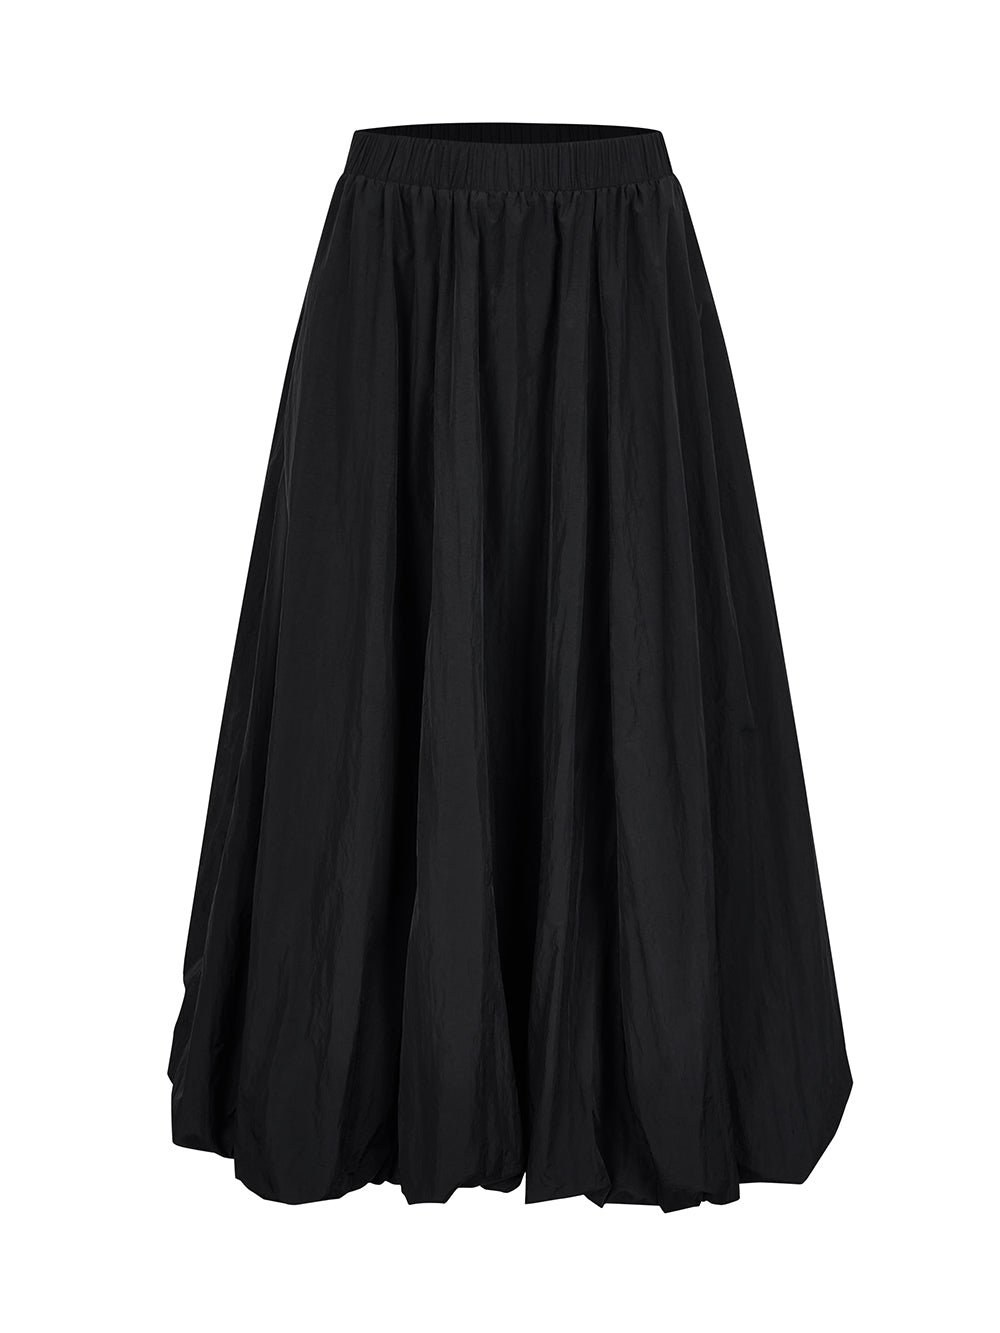 MUKTANK x WESAME A-line Black Midi Skirt with Elastic Waist and Ultra-Thin Flared Hem